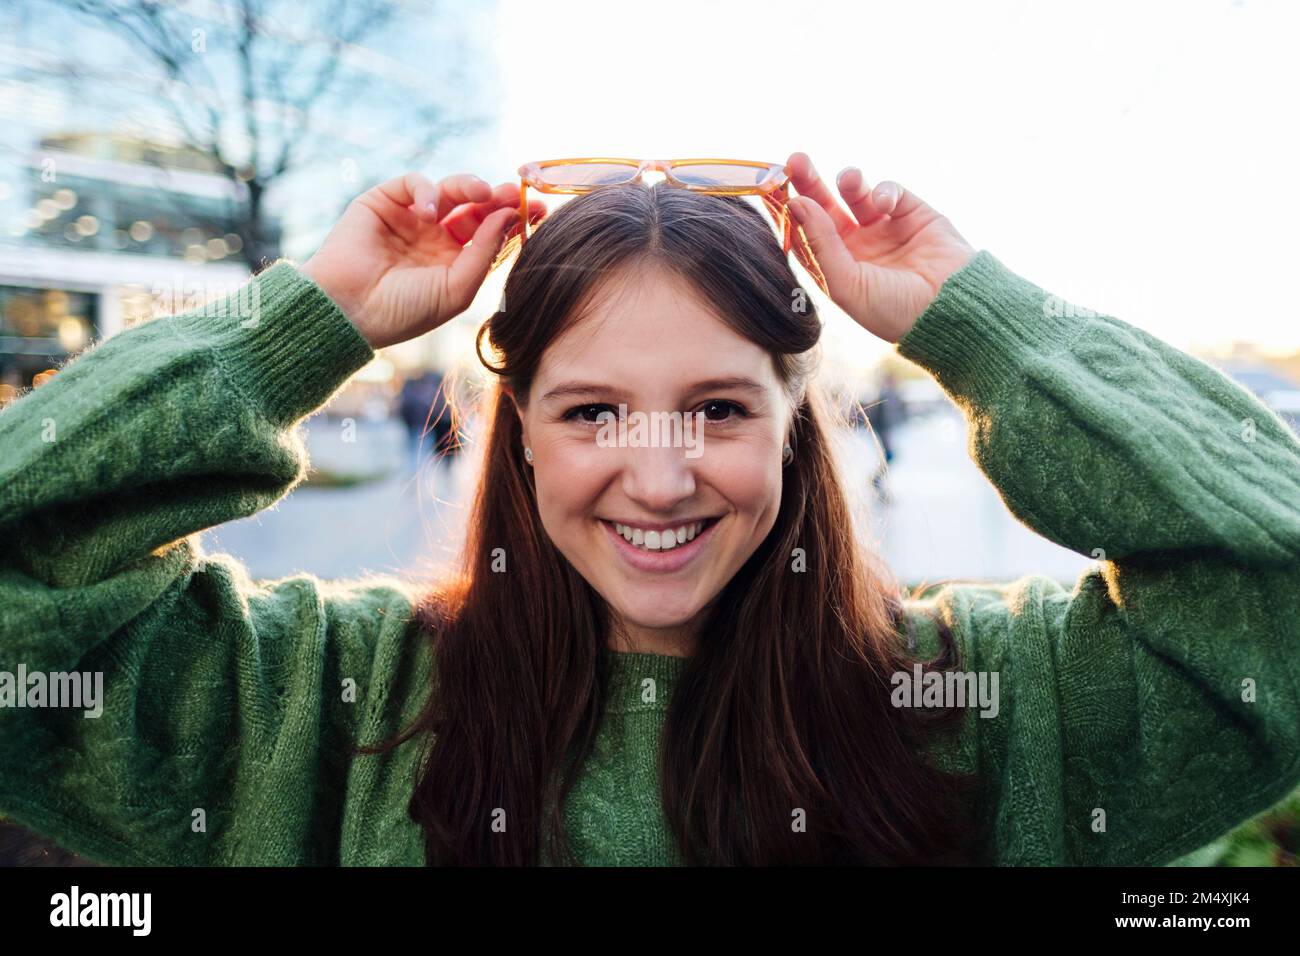 Happy woman wearing green sweater adjusting sunglasses on head Stock Photo